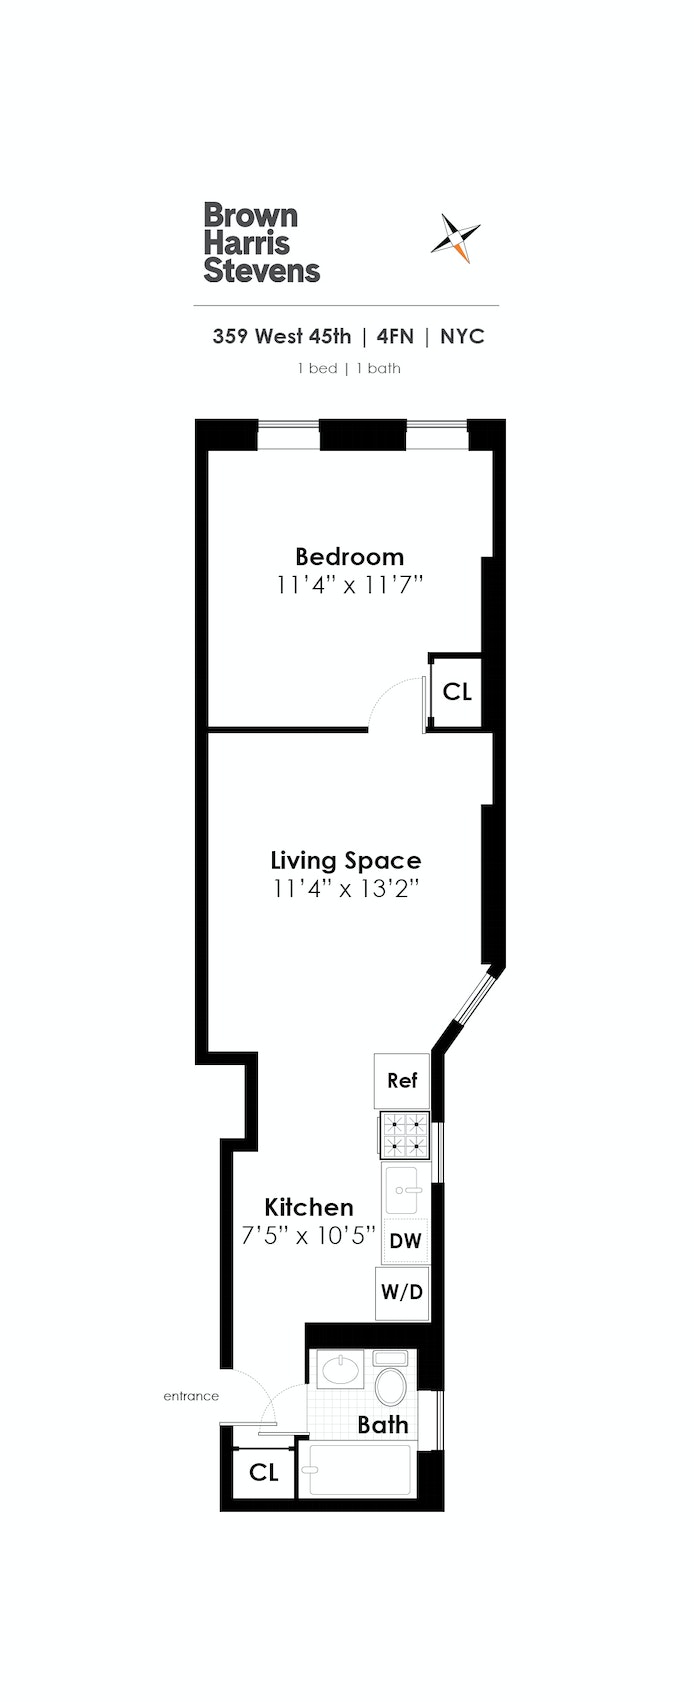 Floorplan for 359 West 45th Street, 4FN